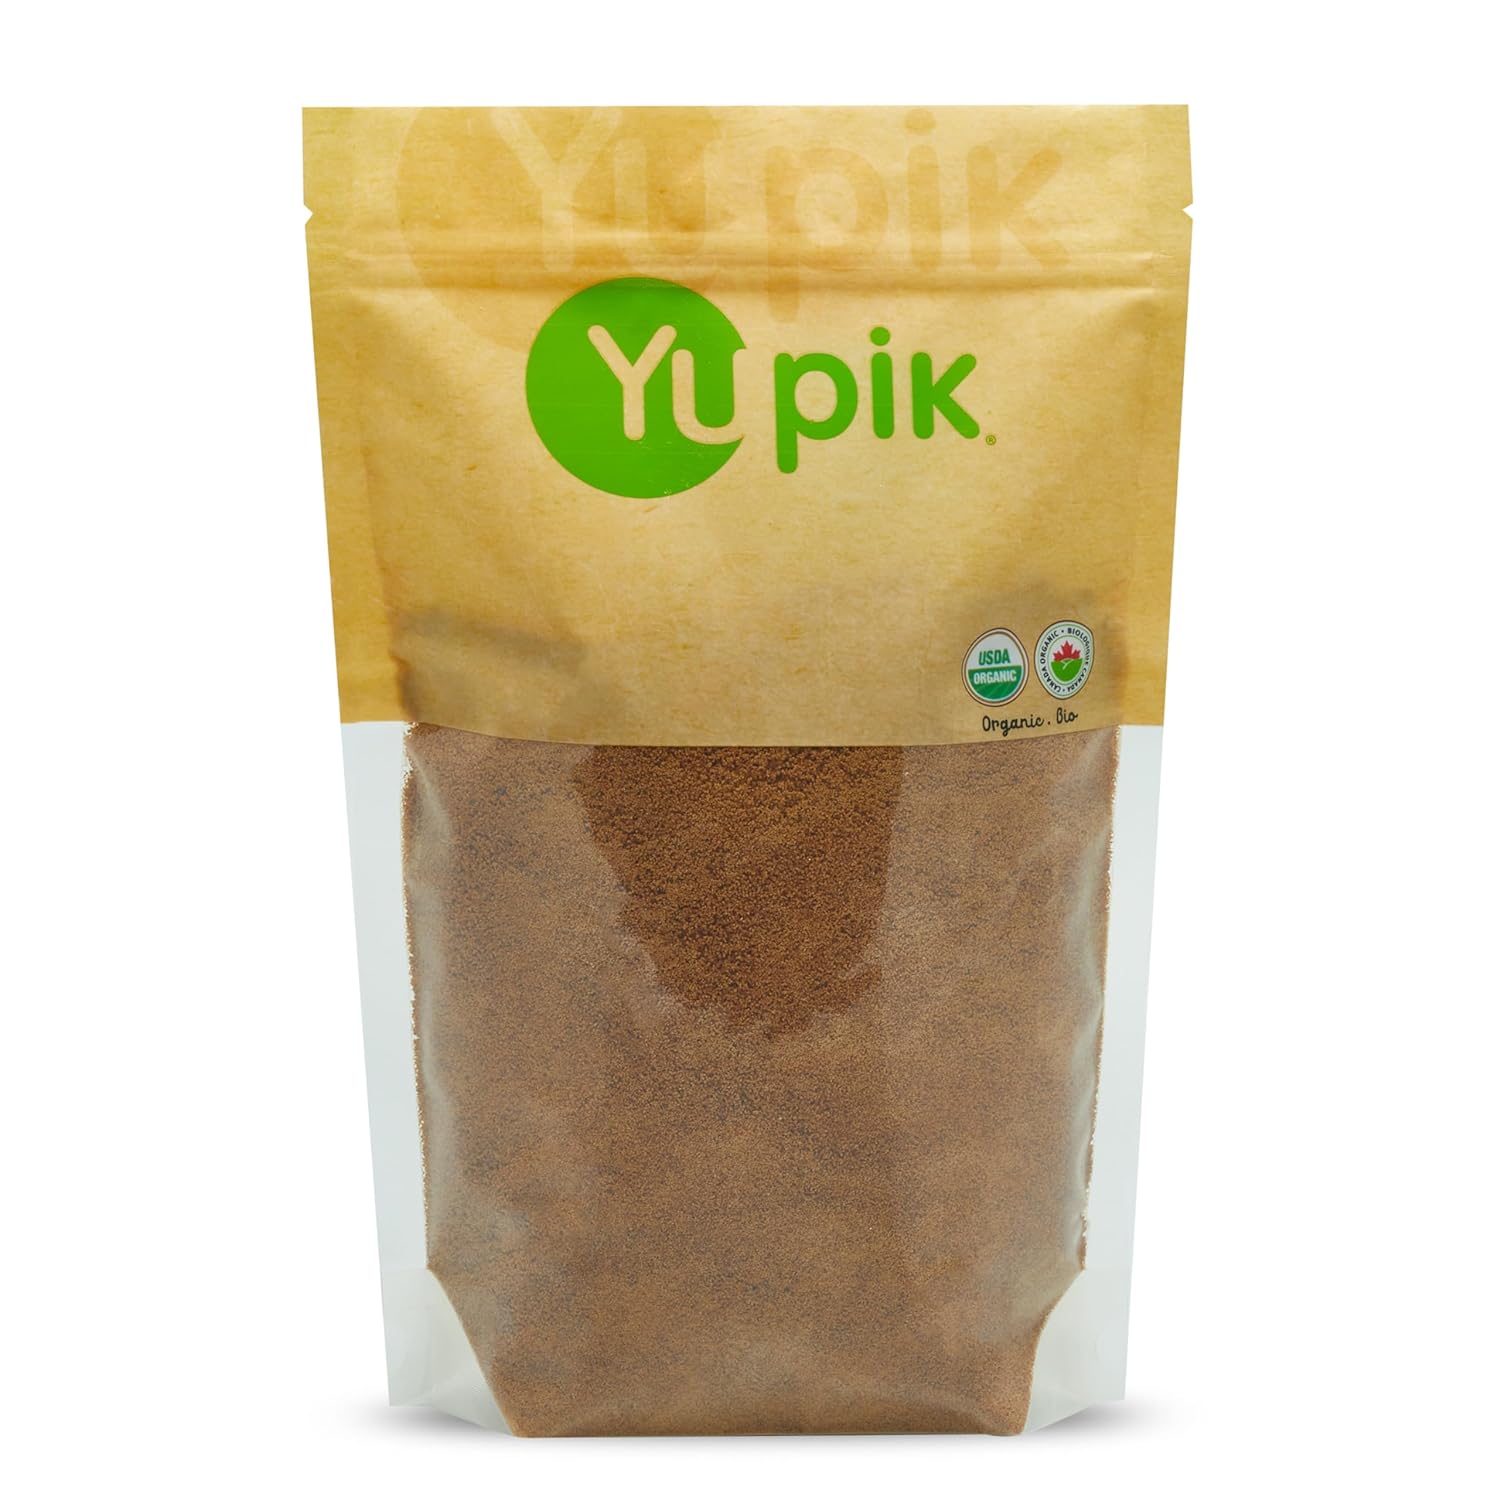 Yupik Organic Coconut Sugar, 2.2 lb, Non-GMO, Vegan, Gluten-Free, Kosher, Natural Sweetner, White Sugar Alternative